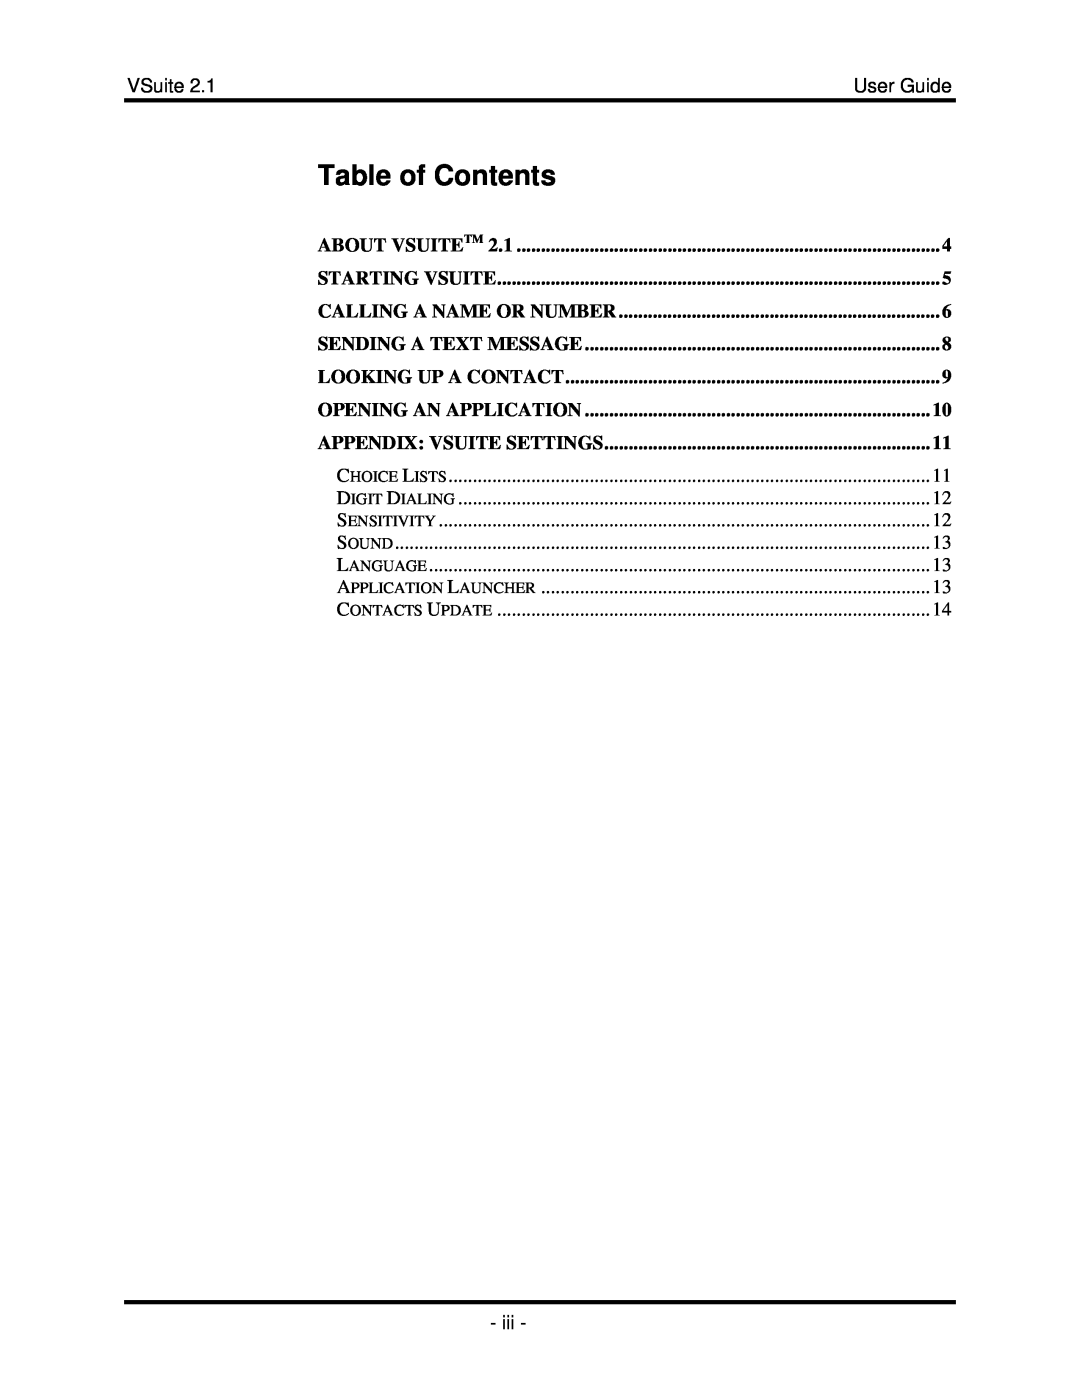 Motorola 2.1 Table of Contents, VSuite, User Guide, About Vsuitetm, Starting Vsuite, Calling A Name Or Number, Sensitivity 